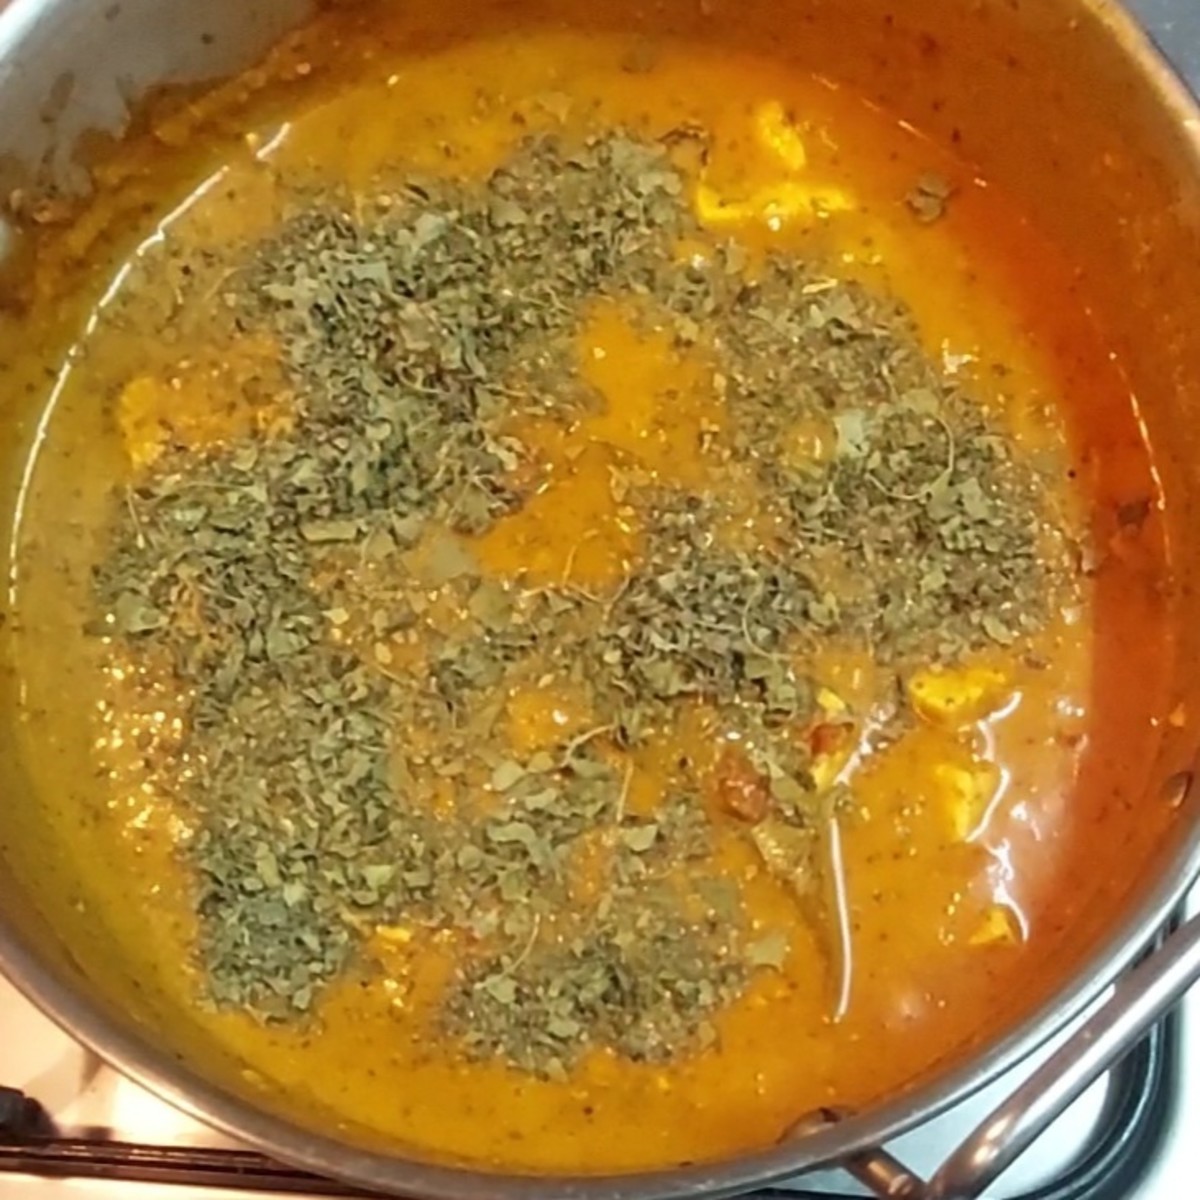 Add 1 tablespoon crushed kasuri methi or dried fenugreek leaves. Mix well.